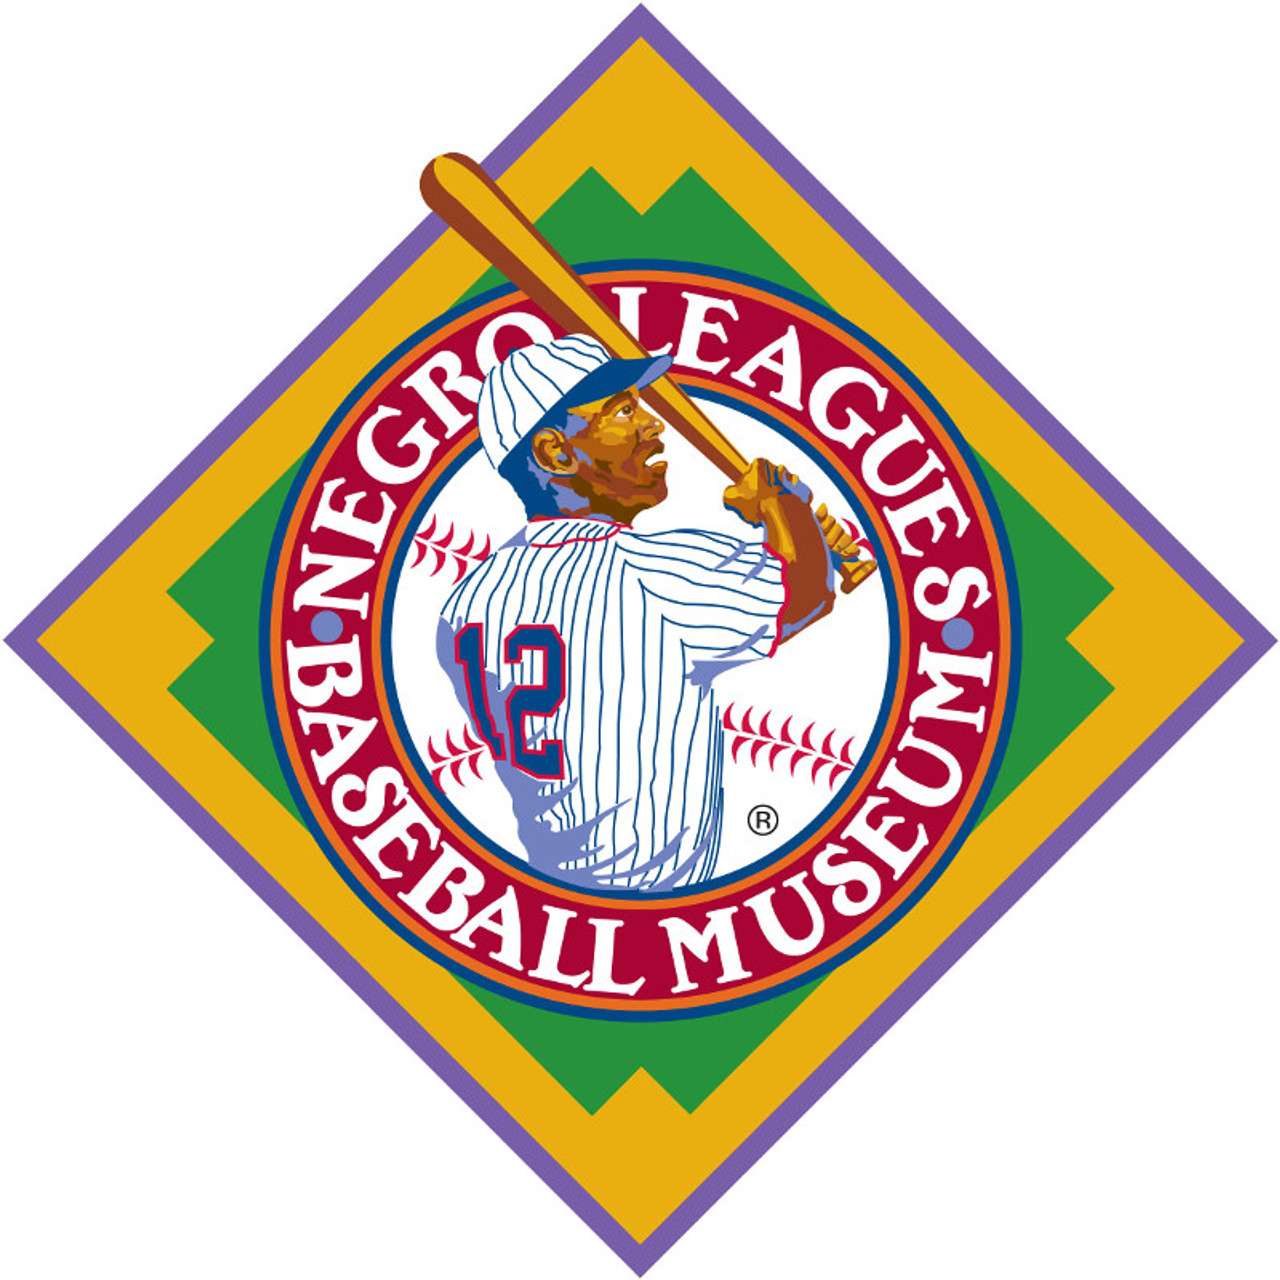 Teambrown Apparel  AAGPBL, Negro League and Historic Baseball Shirts